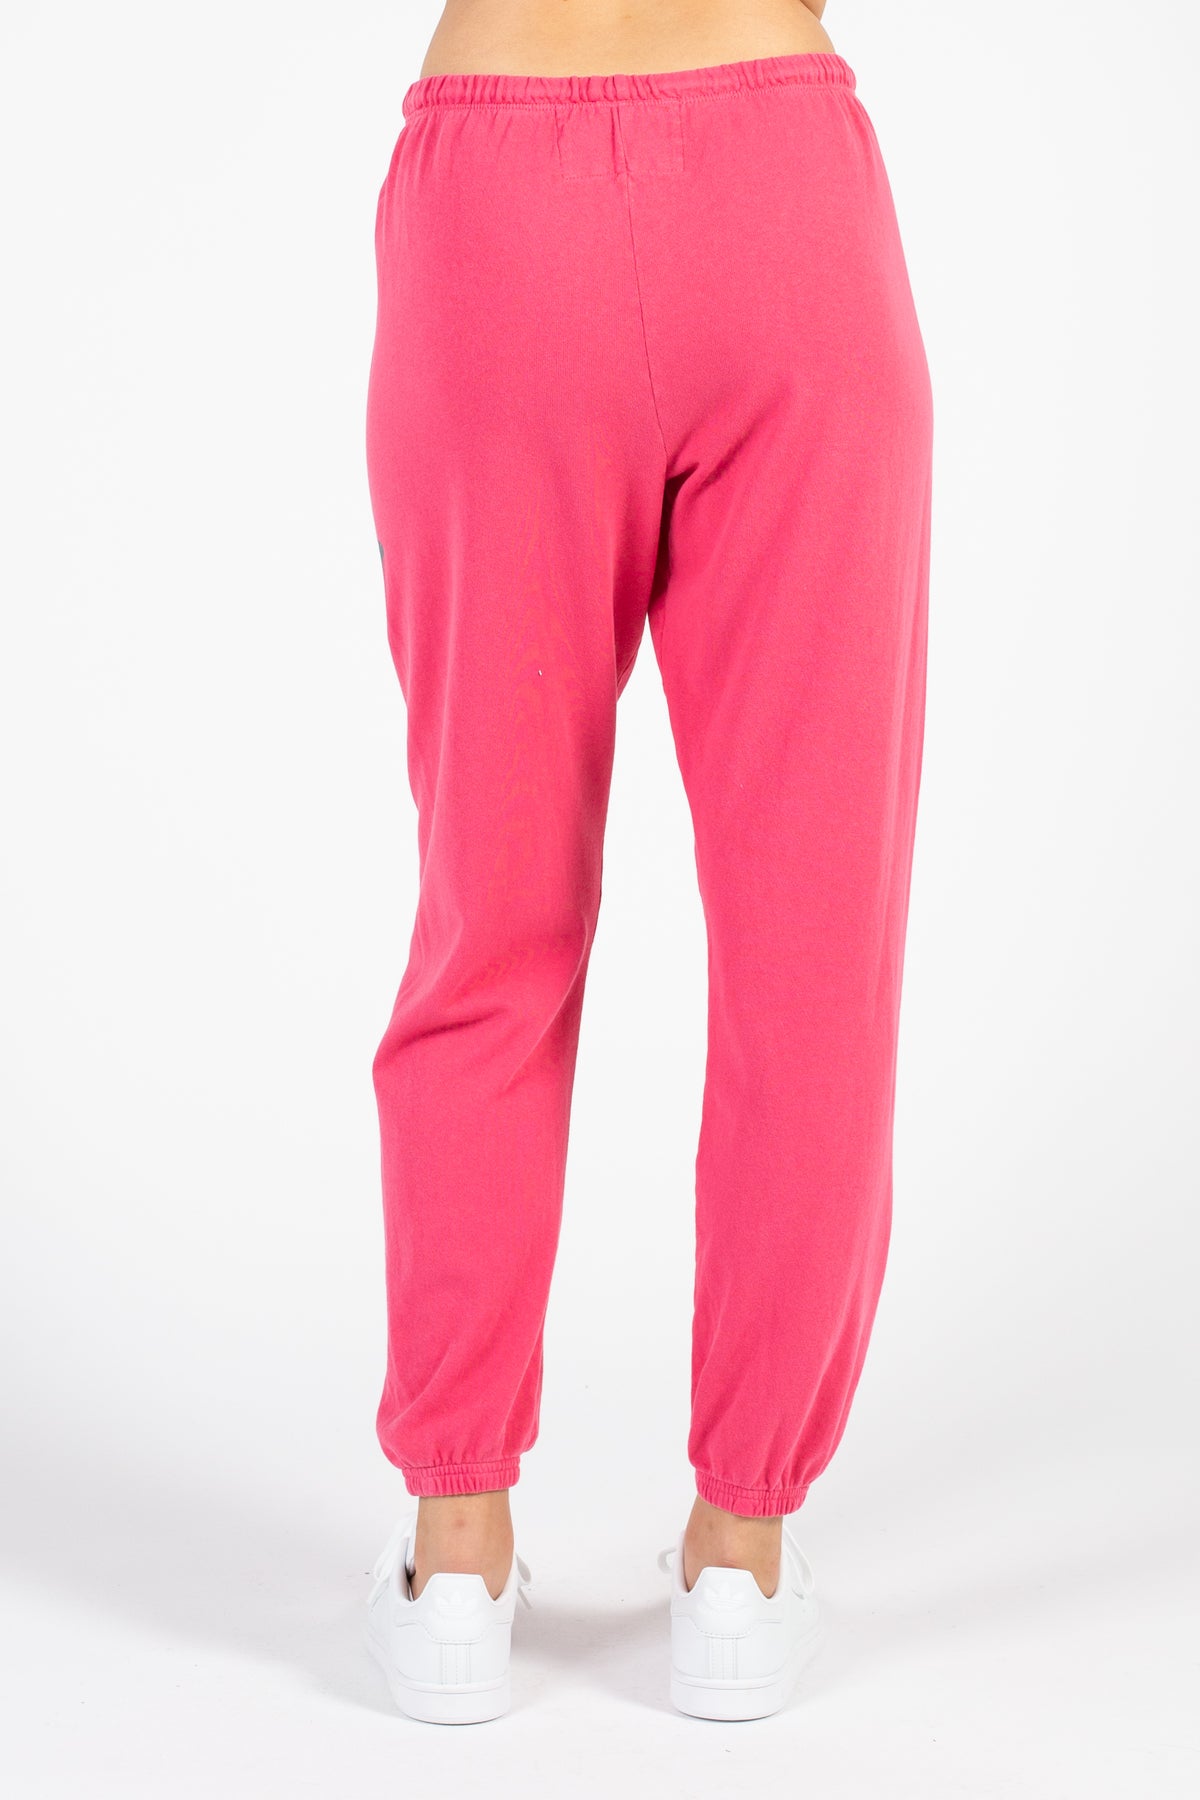 Victoria's Secret Pink Fleece Joggers, Women's Sweatpants, Pink (XS) at   Women's Clothing store